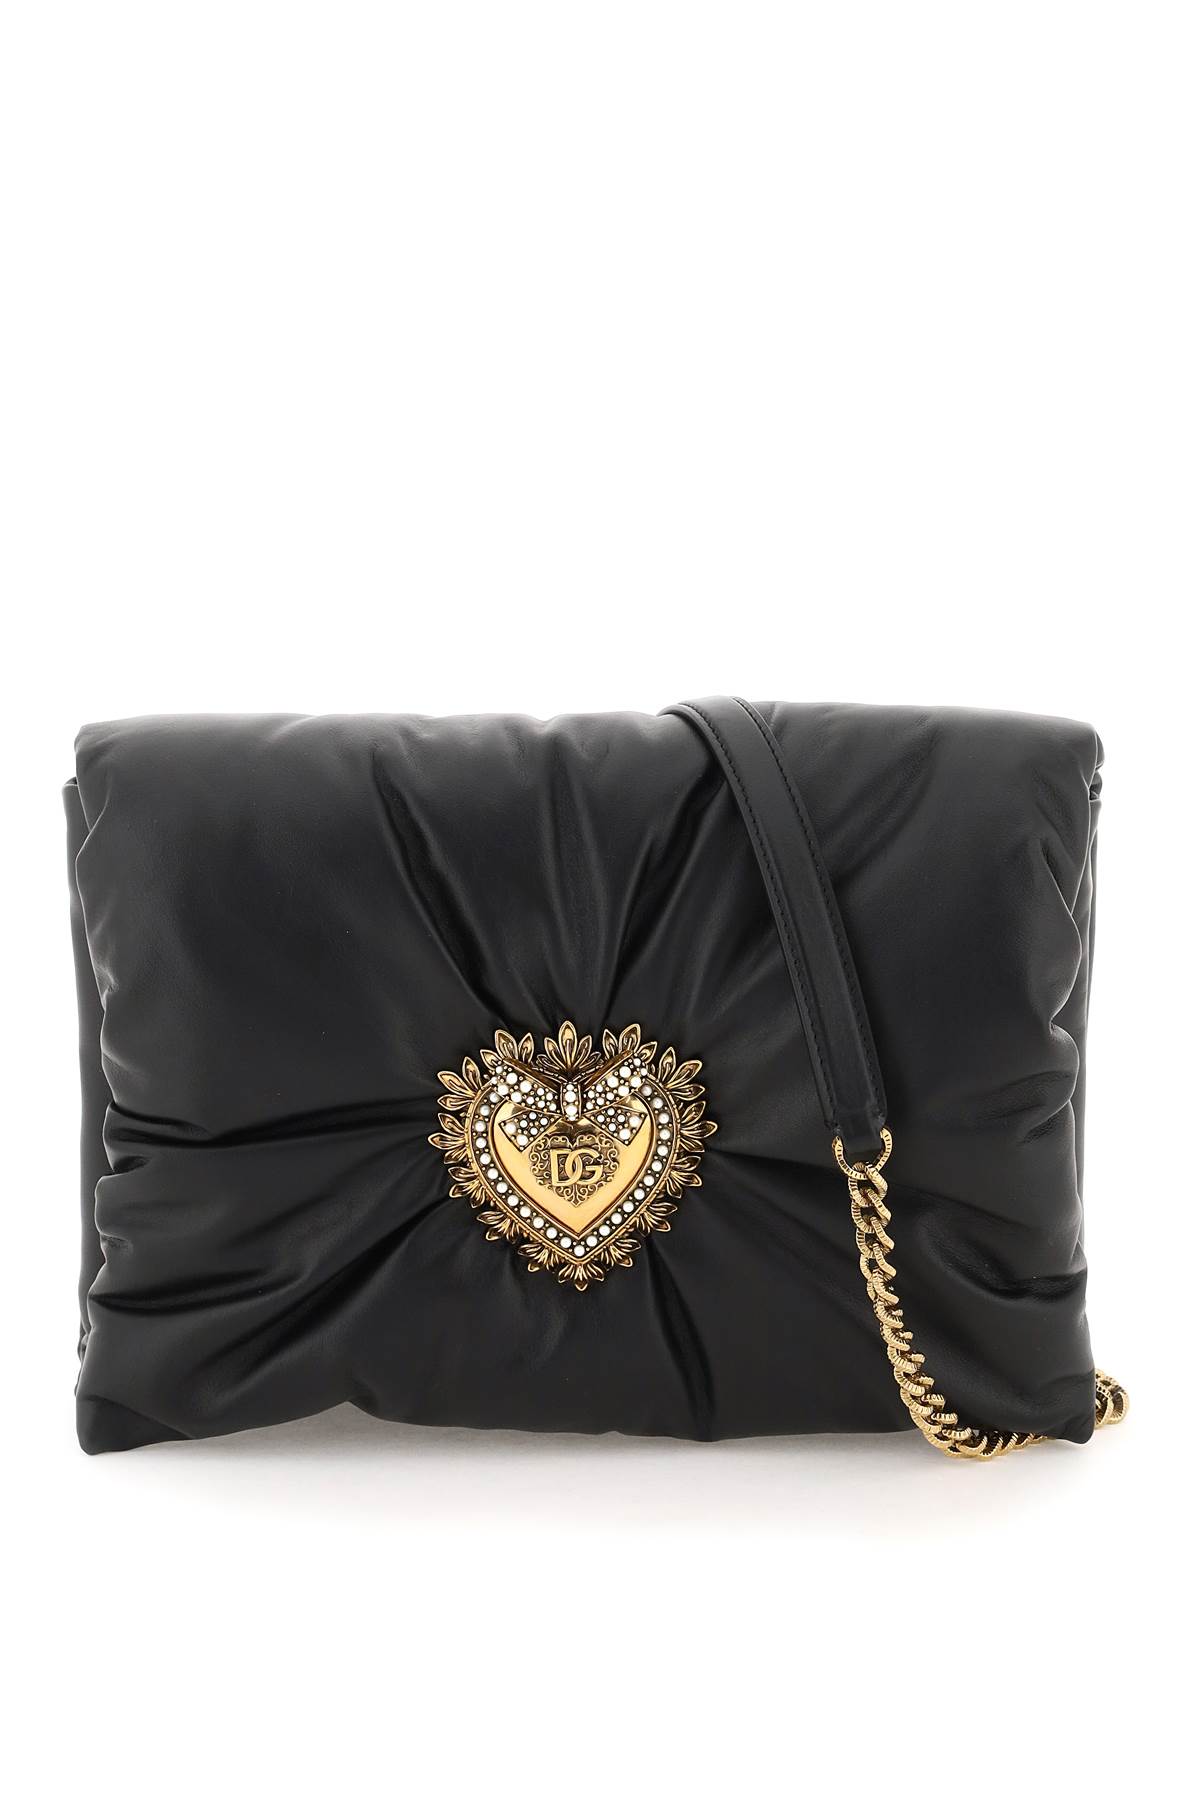 Dolce & Gabbana Soft Devotion Shoulder Bag In Nero